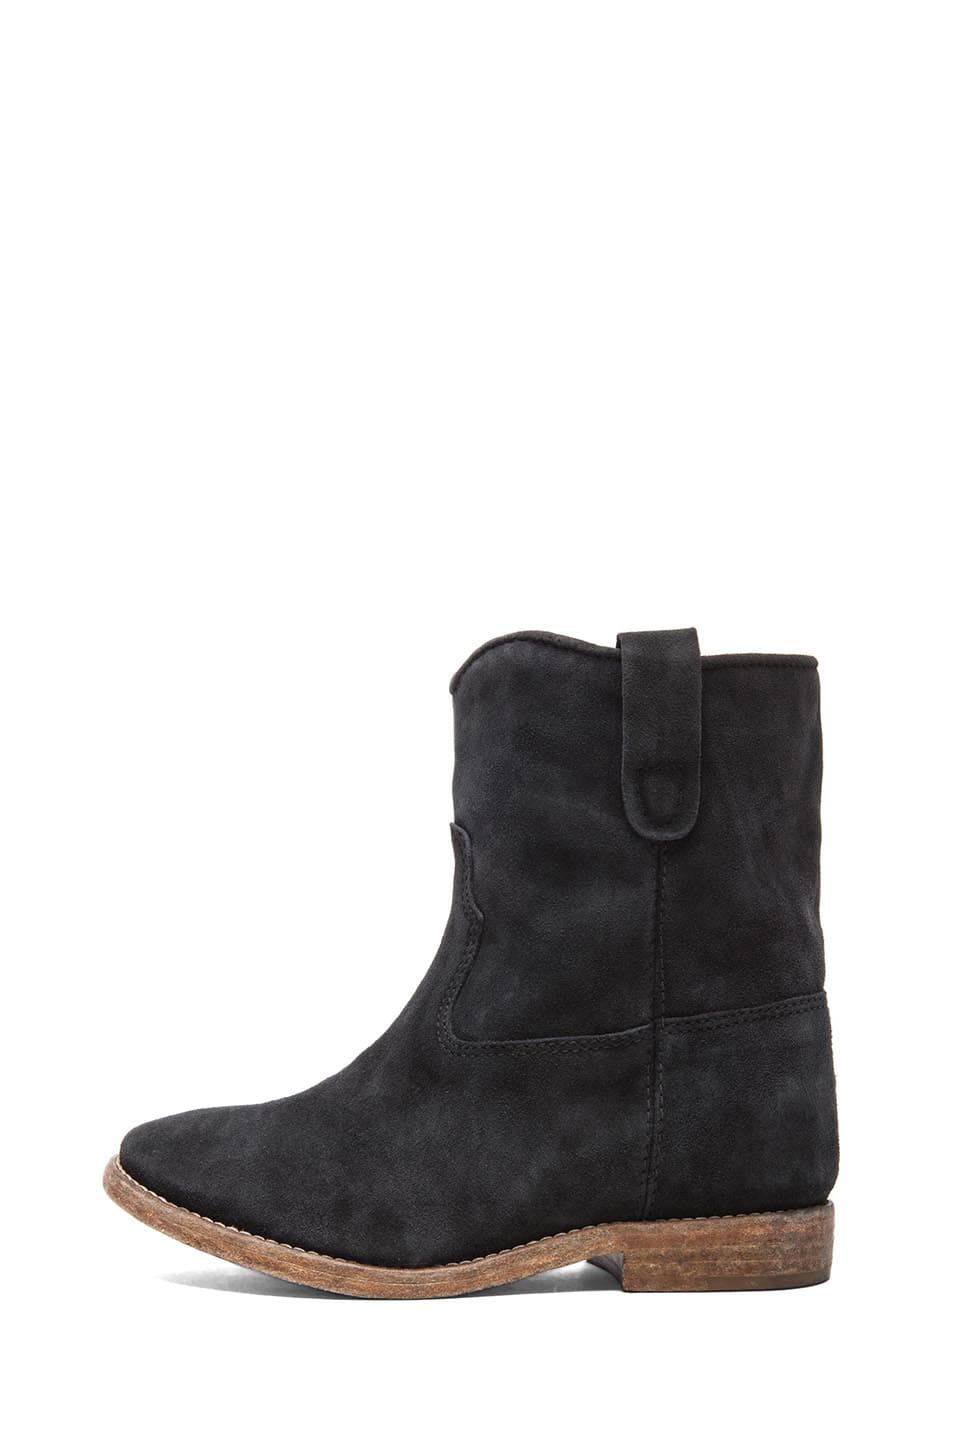 Isabel Marant Crisi Calfskin Velvet Leather Boots in Anthracite | FWRD